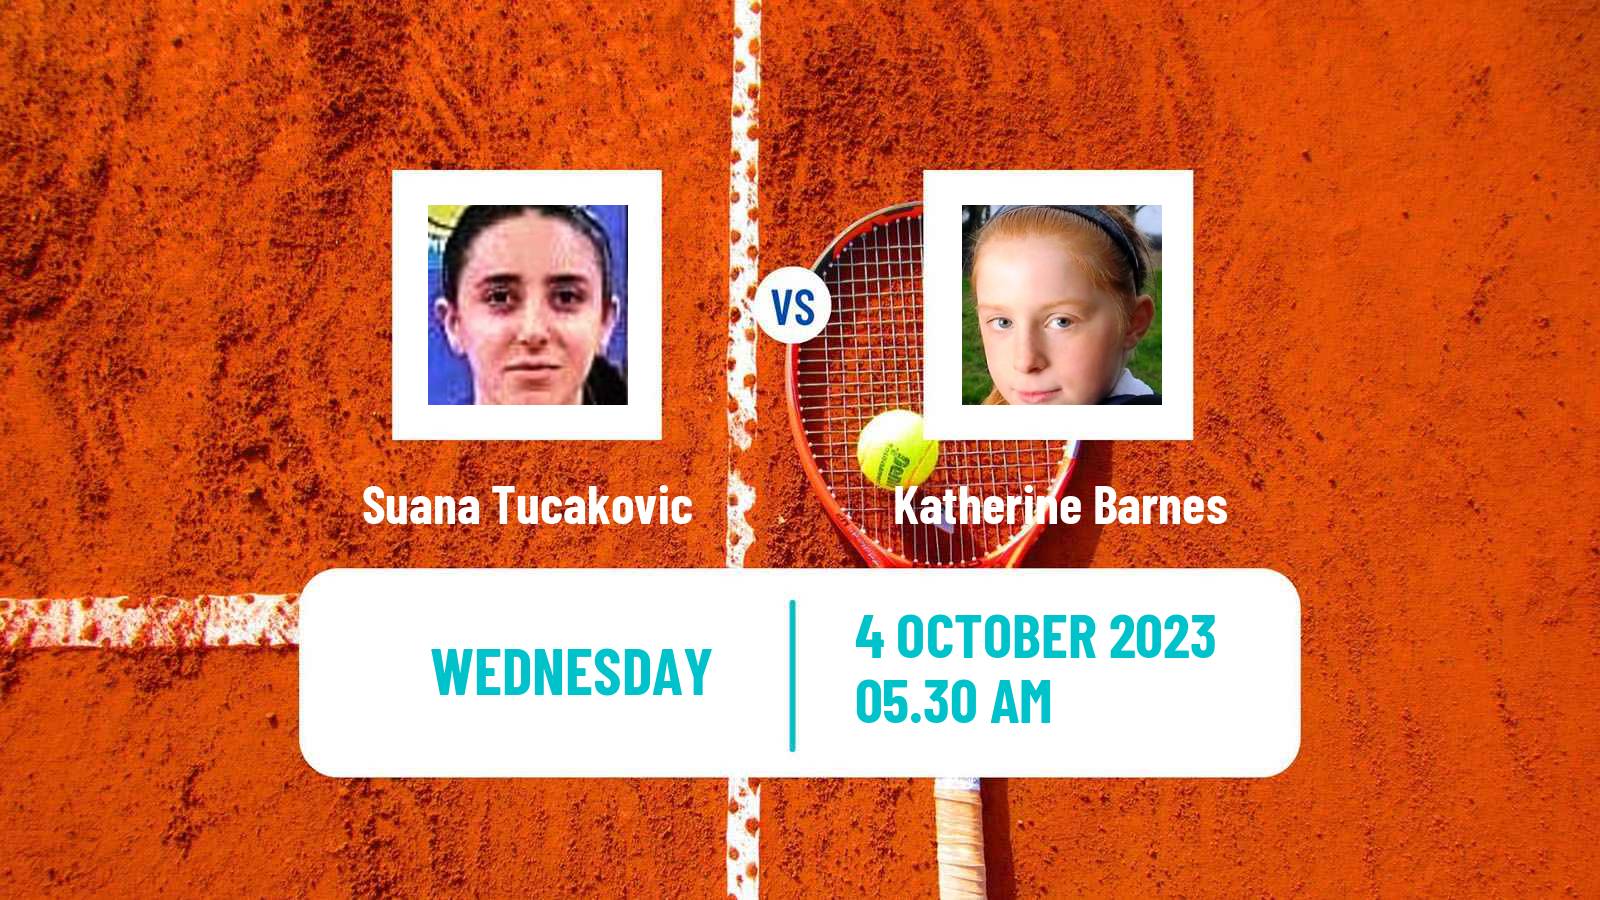 Tennis ITF W15 Sibenik Women Suana Tucakovic - Katherine Barnes